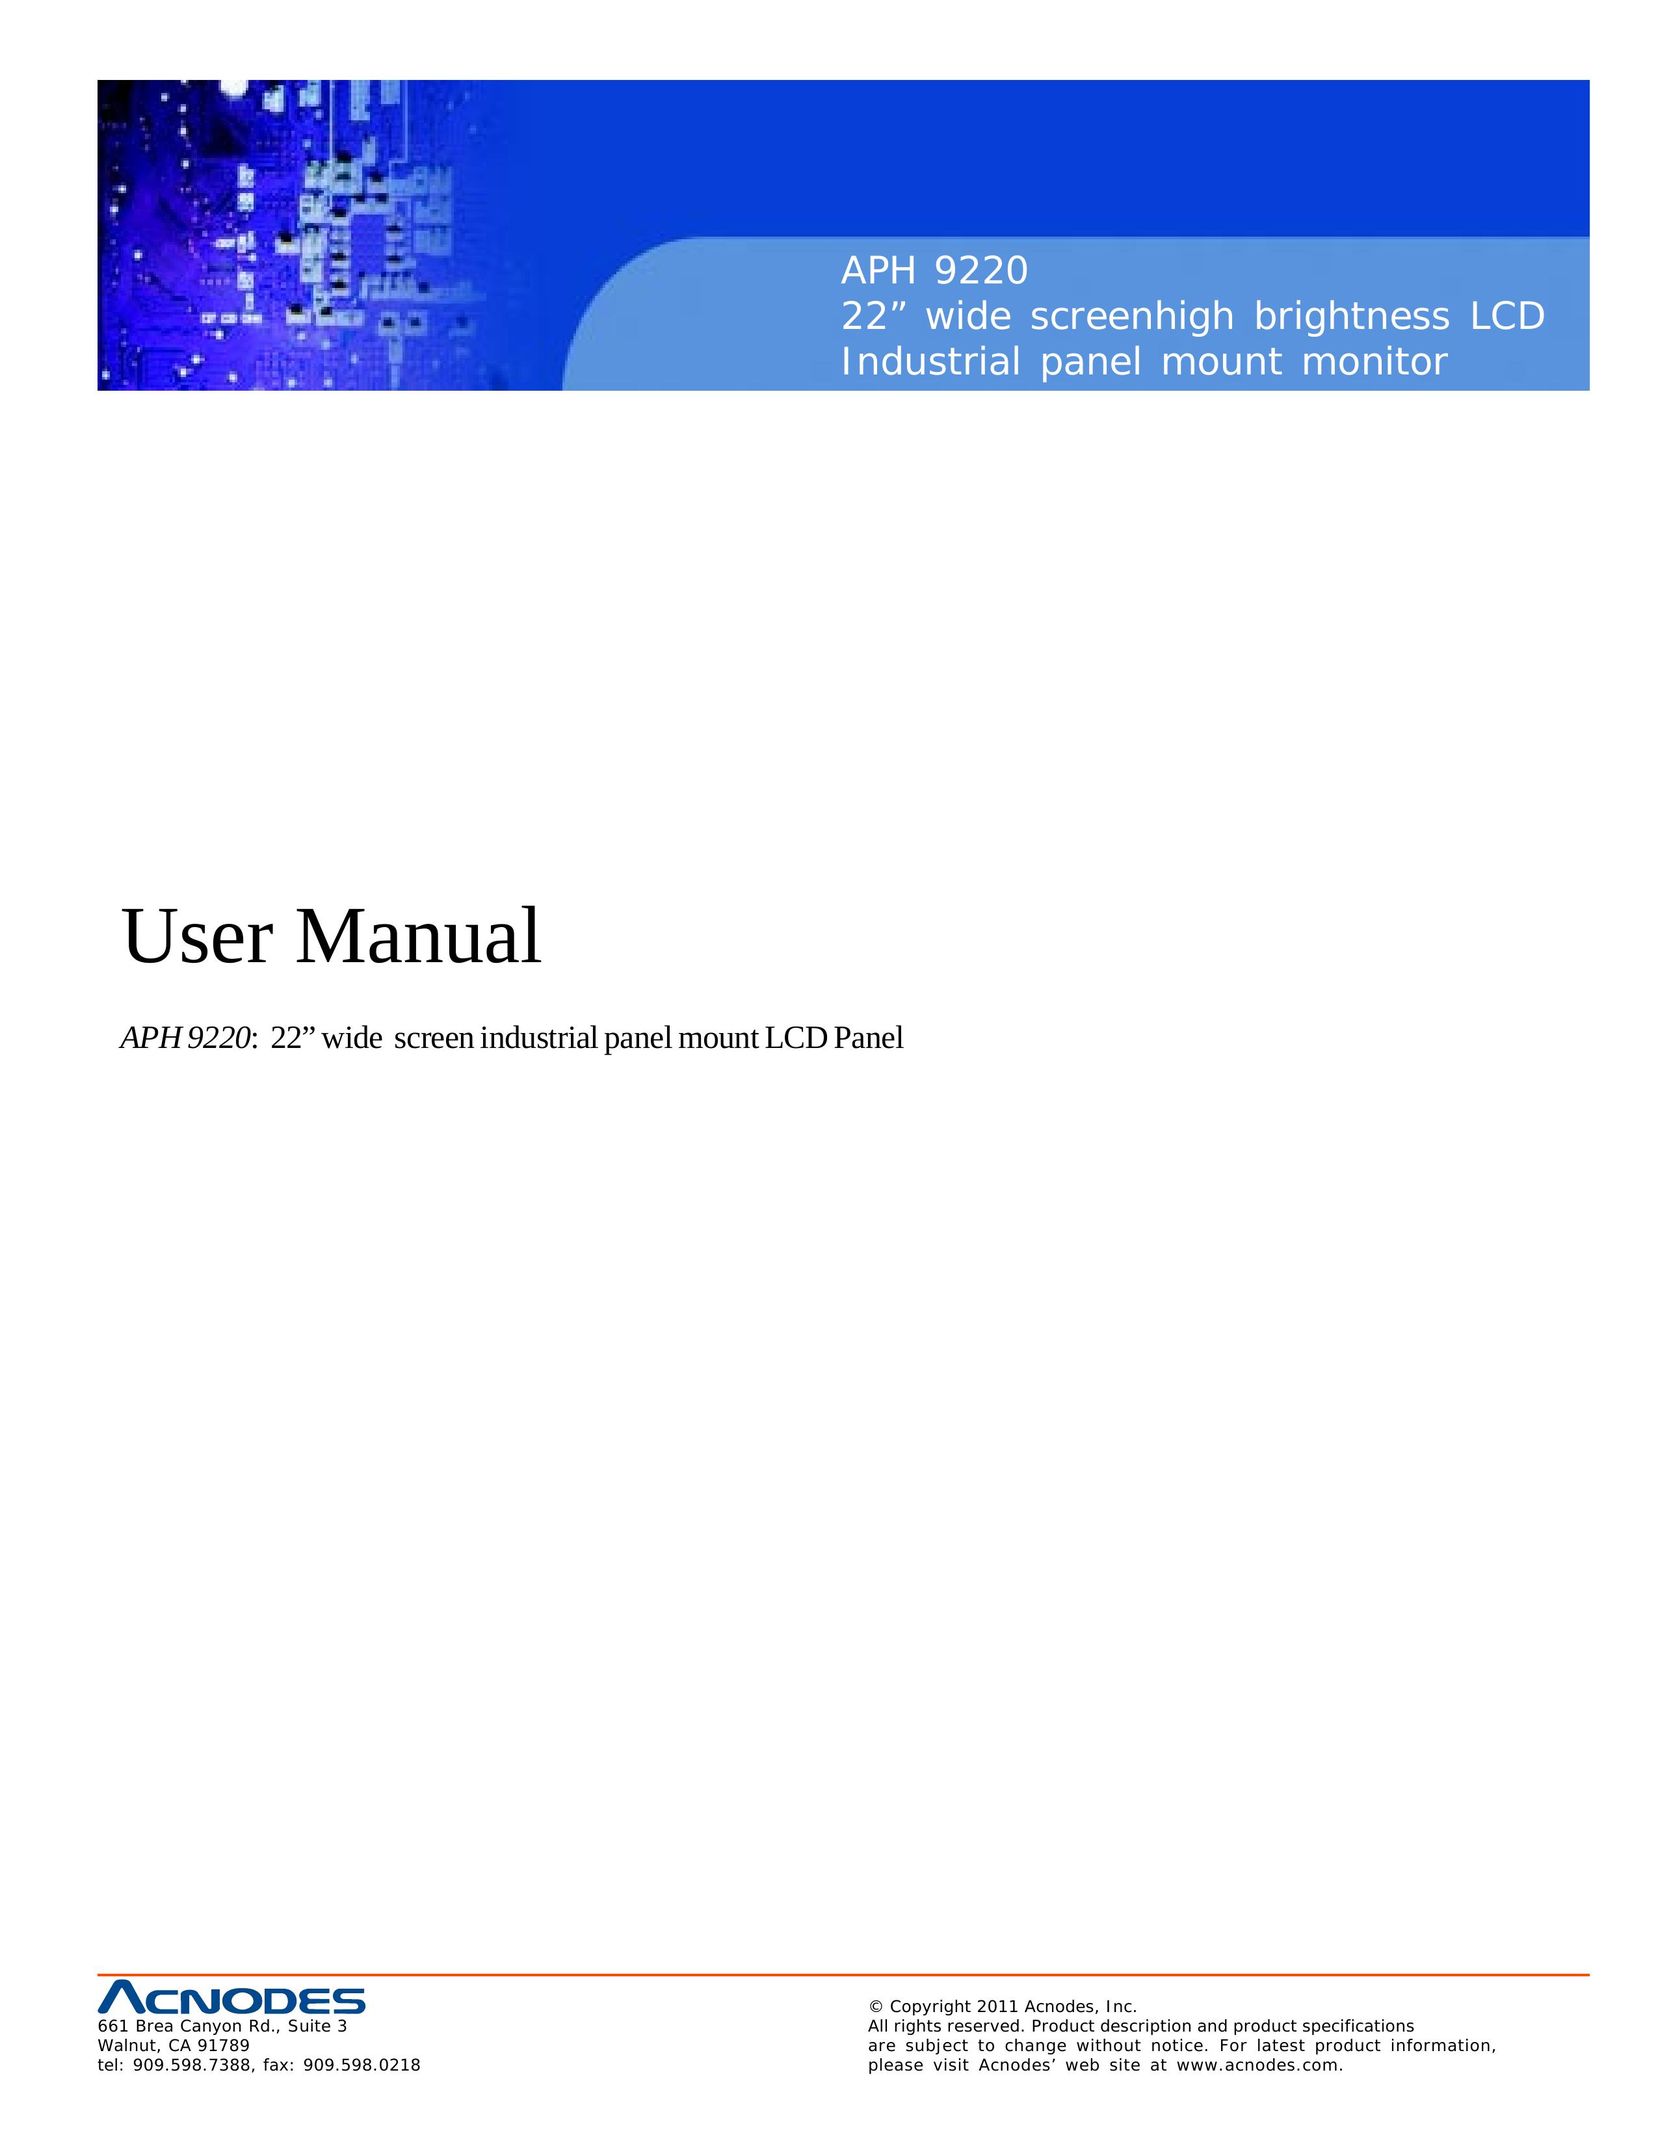 Acnodes APH 9220 Computer Monitor User Manual